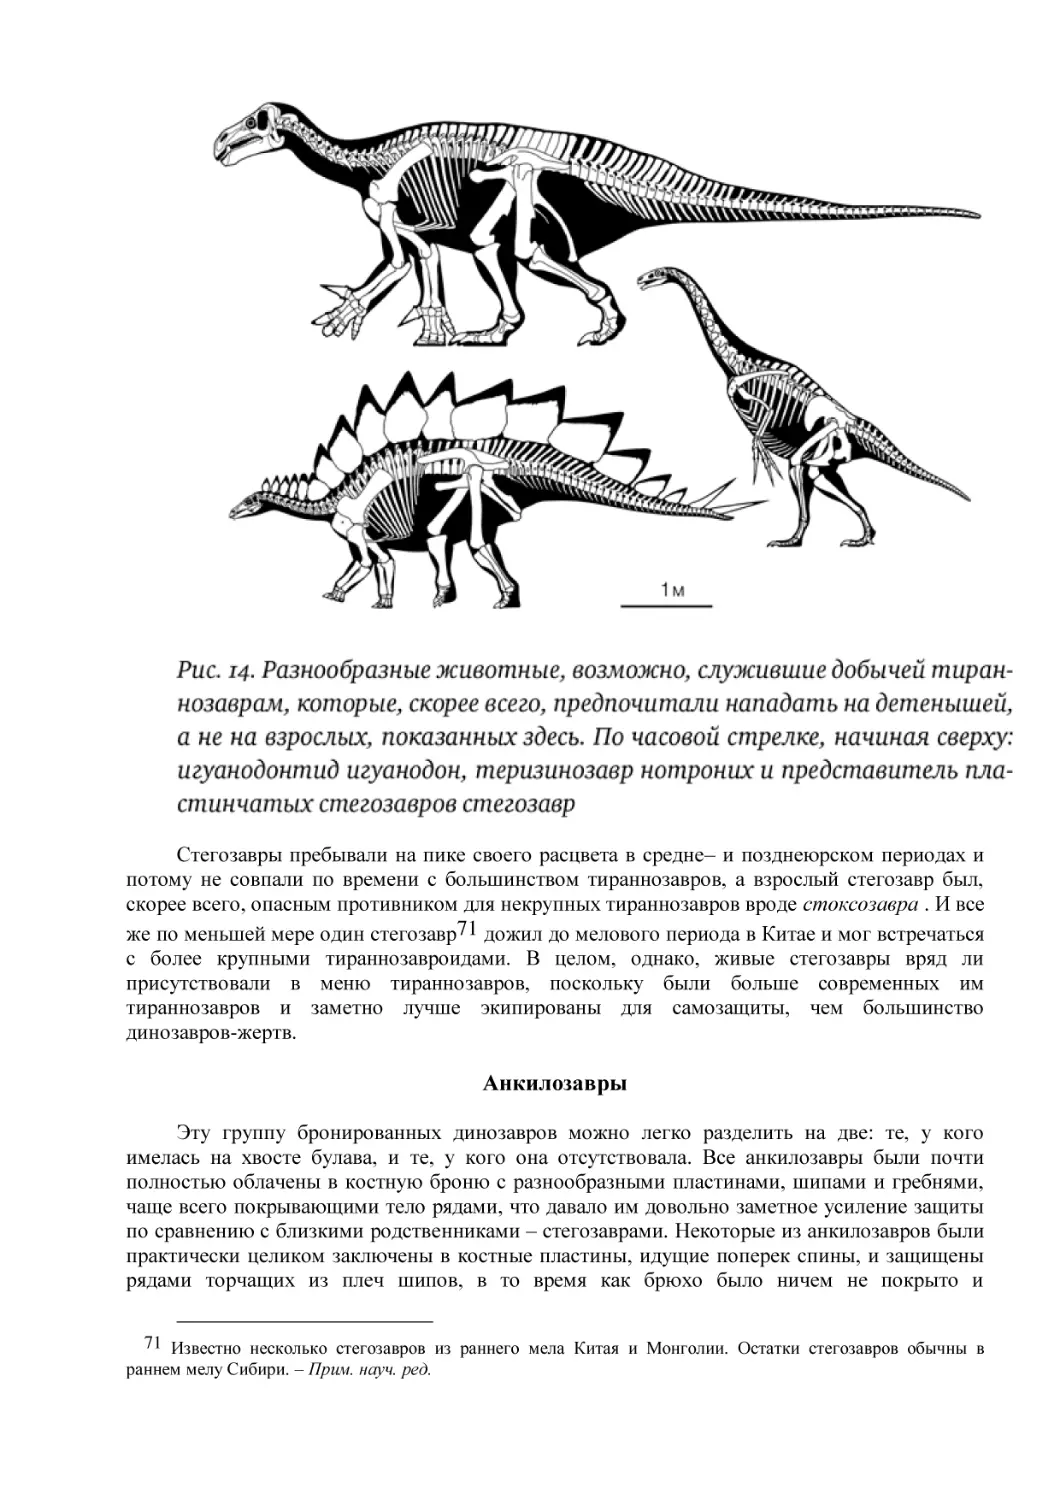 Анкилозавры